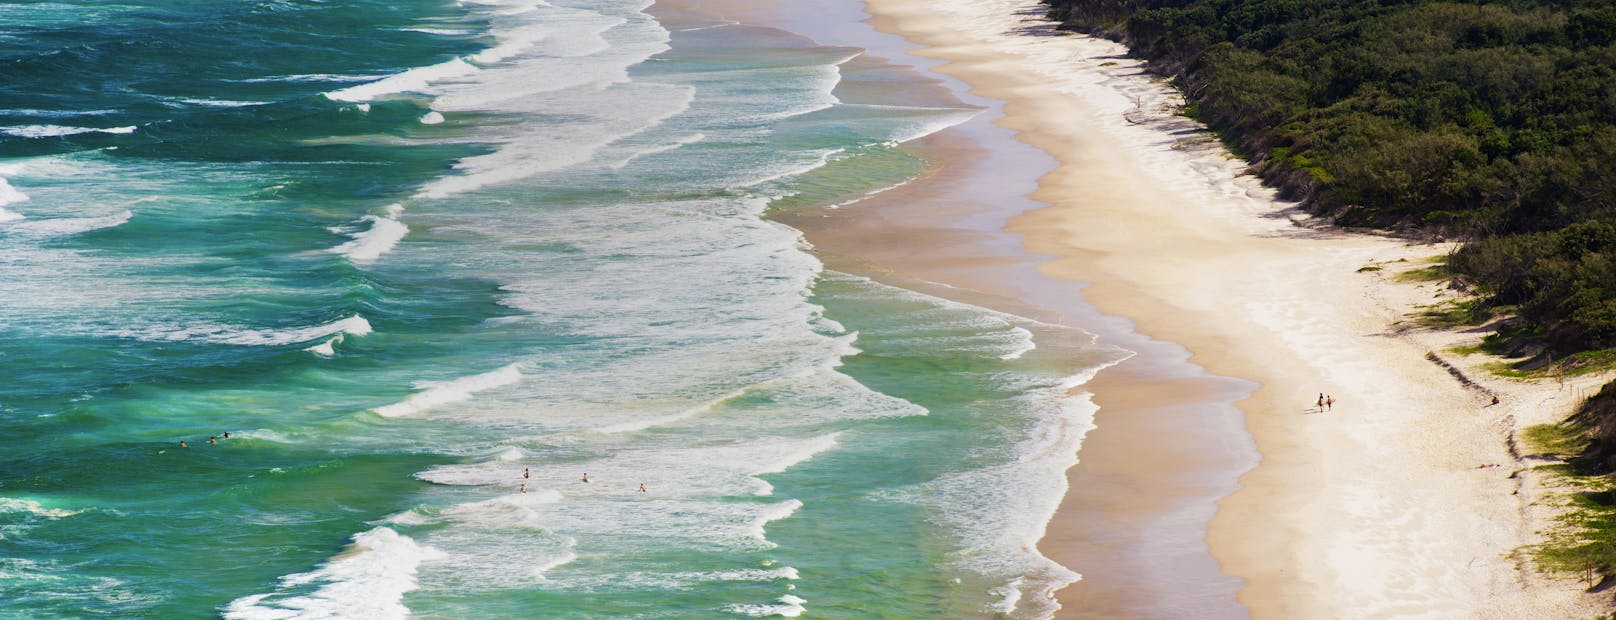 Surfer auf dem Weg ins Wasser am Tallow Beach in Australien.<br>